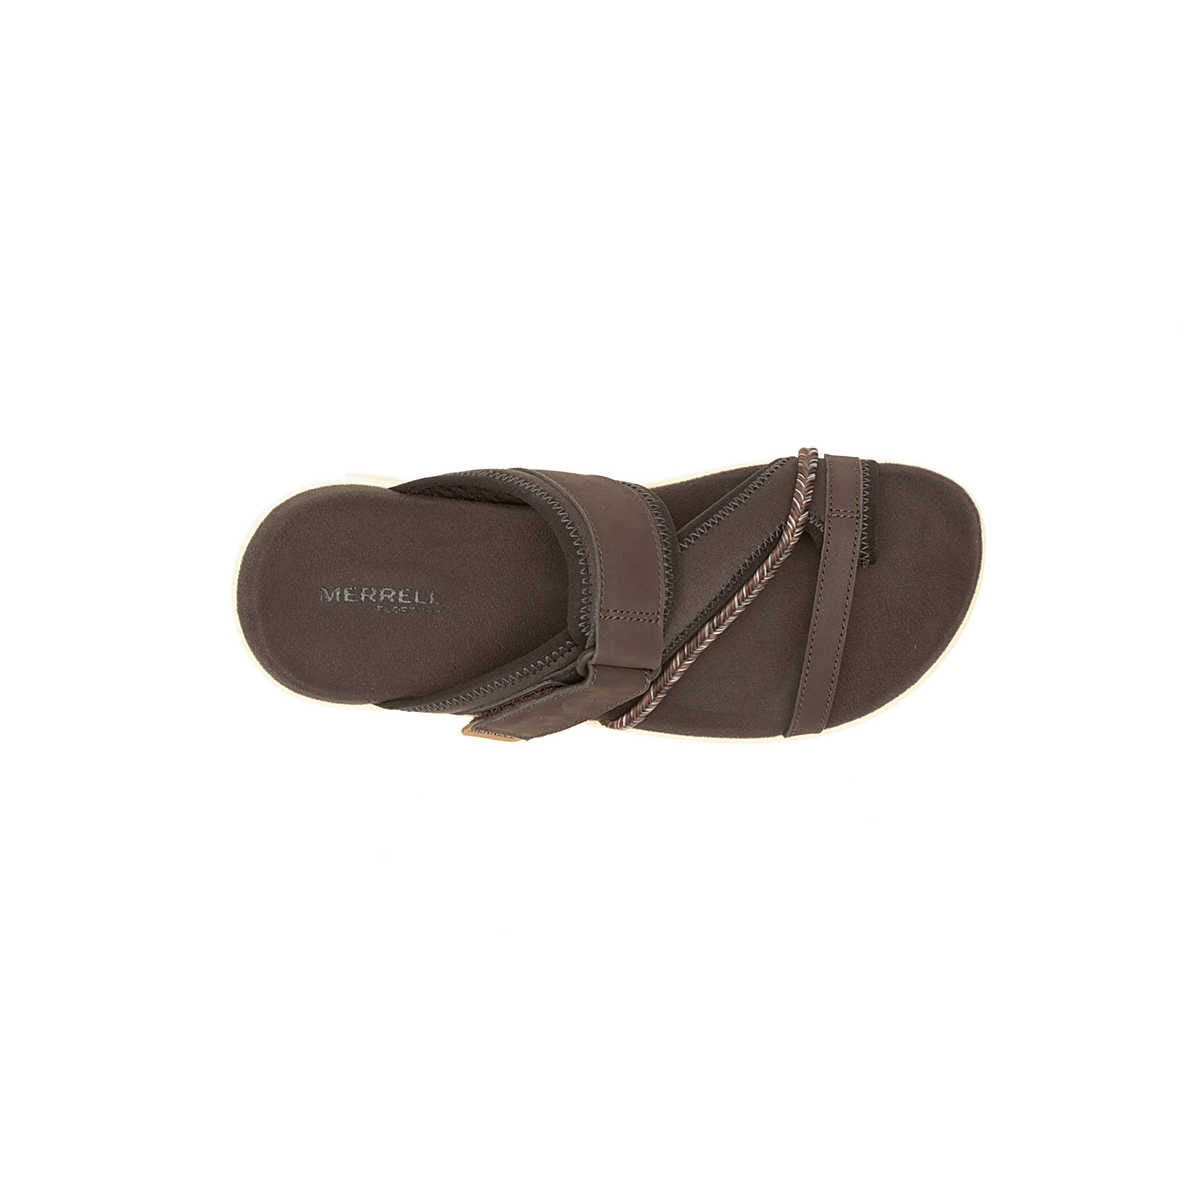 A pair of brown Merrell Terran 4 Slide Bracken sandals with adjustable straps against a white background.